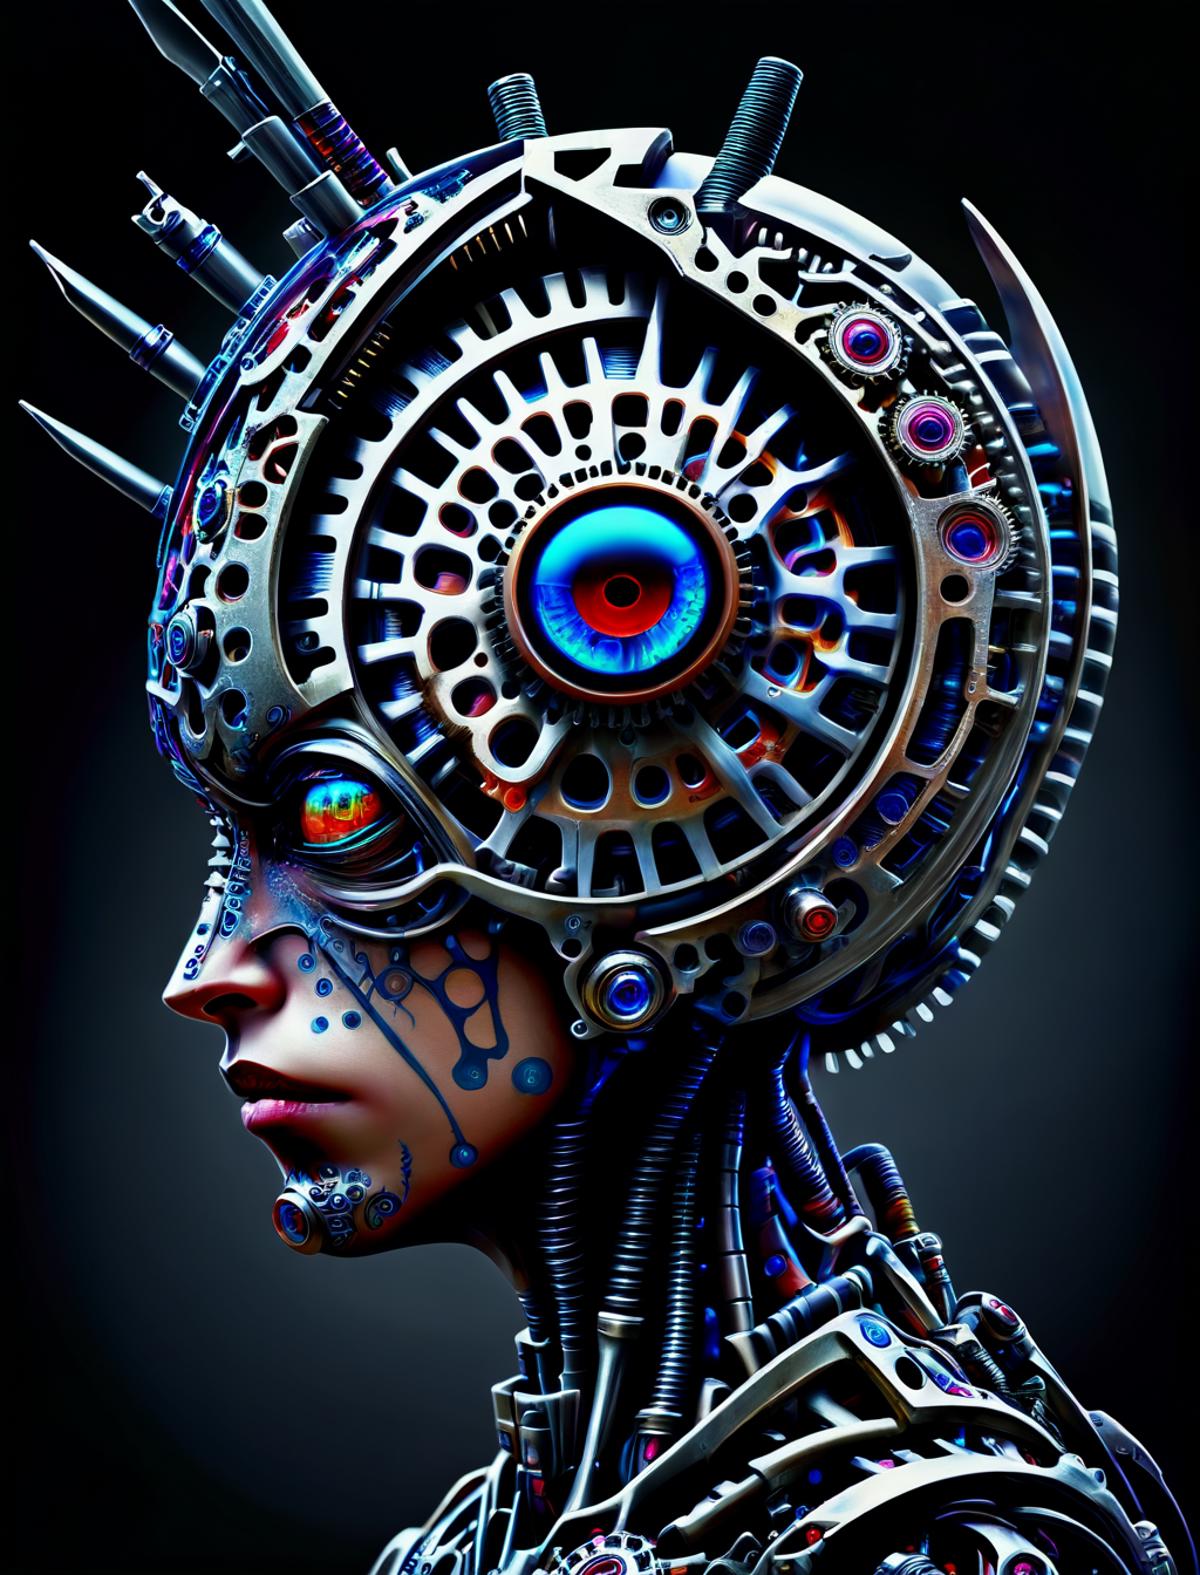 AI model image by Rasali